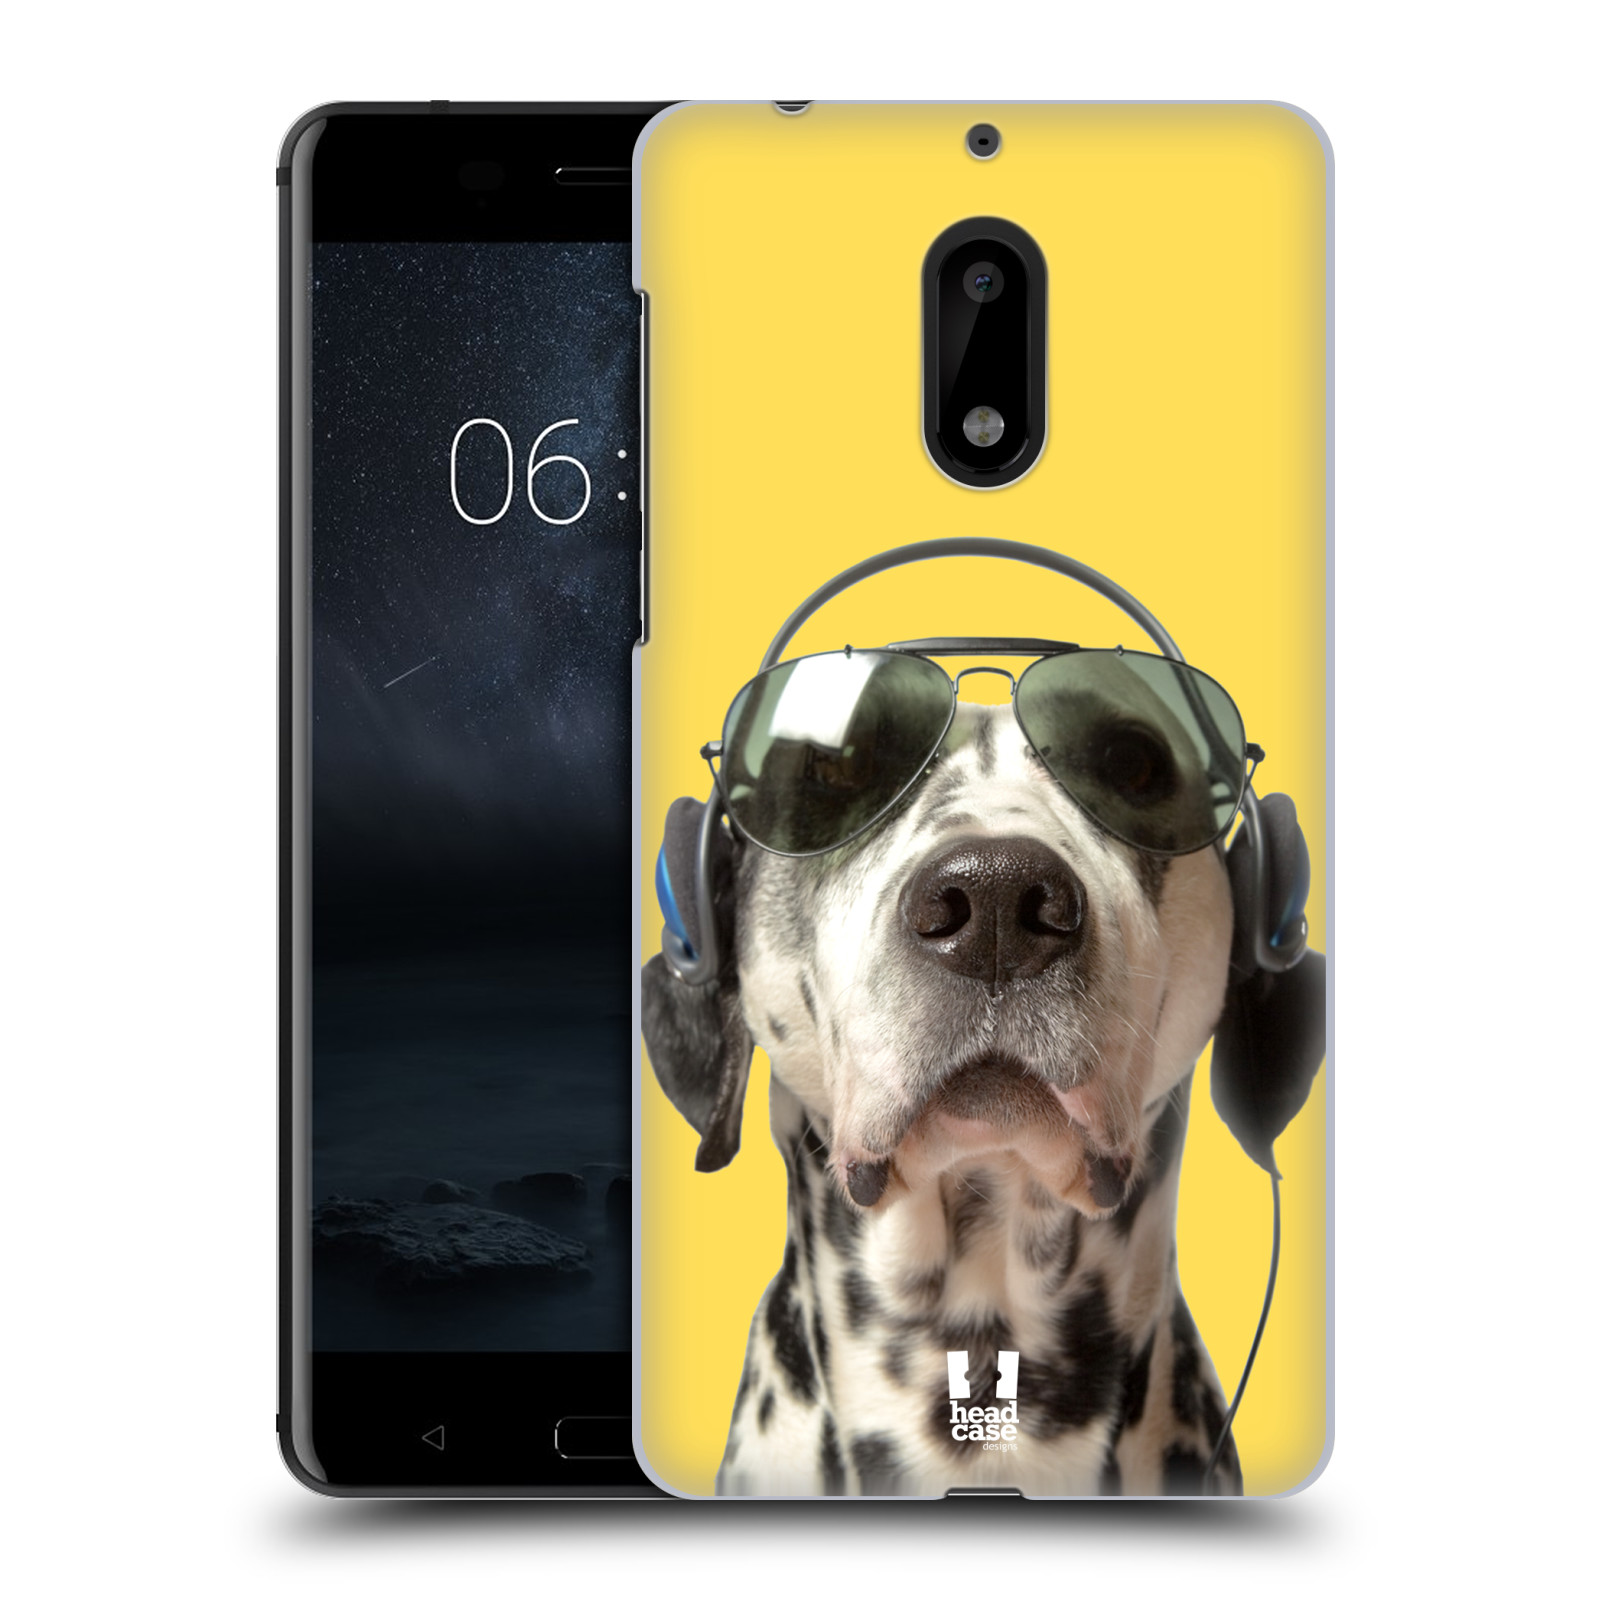 HEAD CASE plastový obal na mobil Nokia 6 vzor Legrační zvířátka dalmatin se sluchátky žlutá